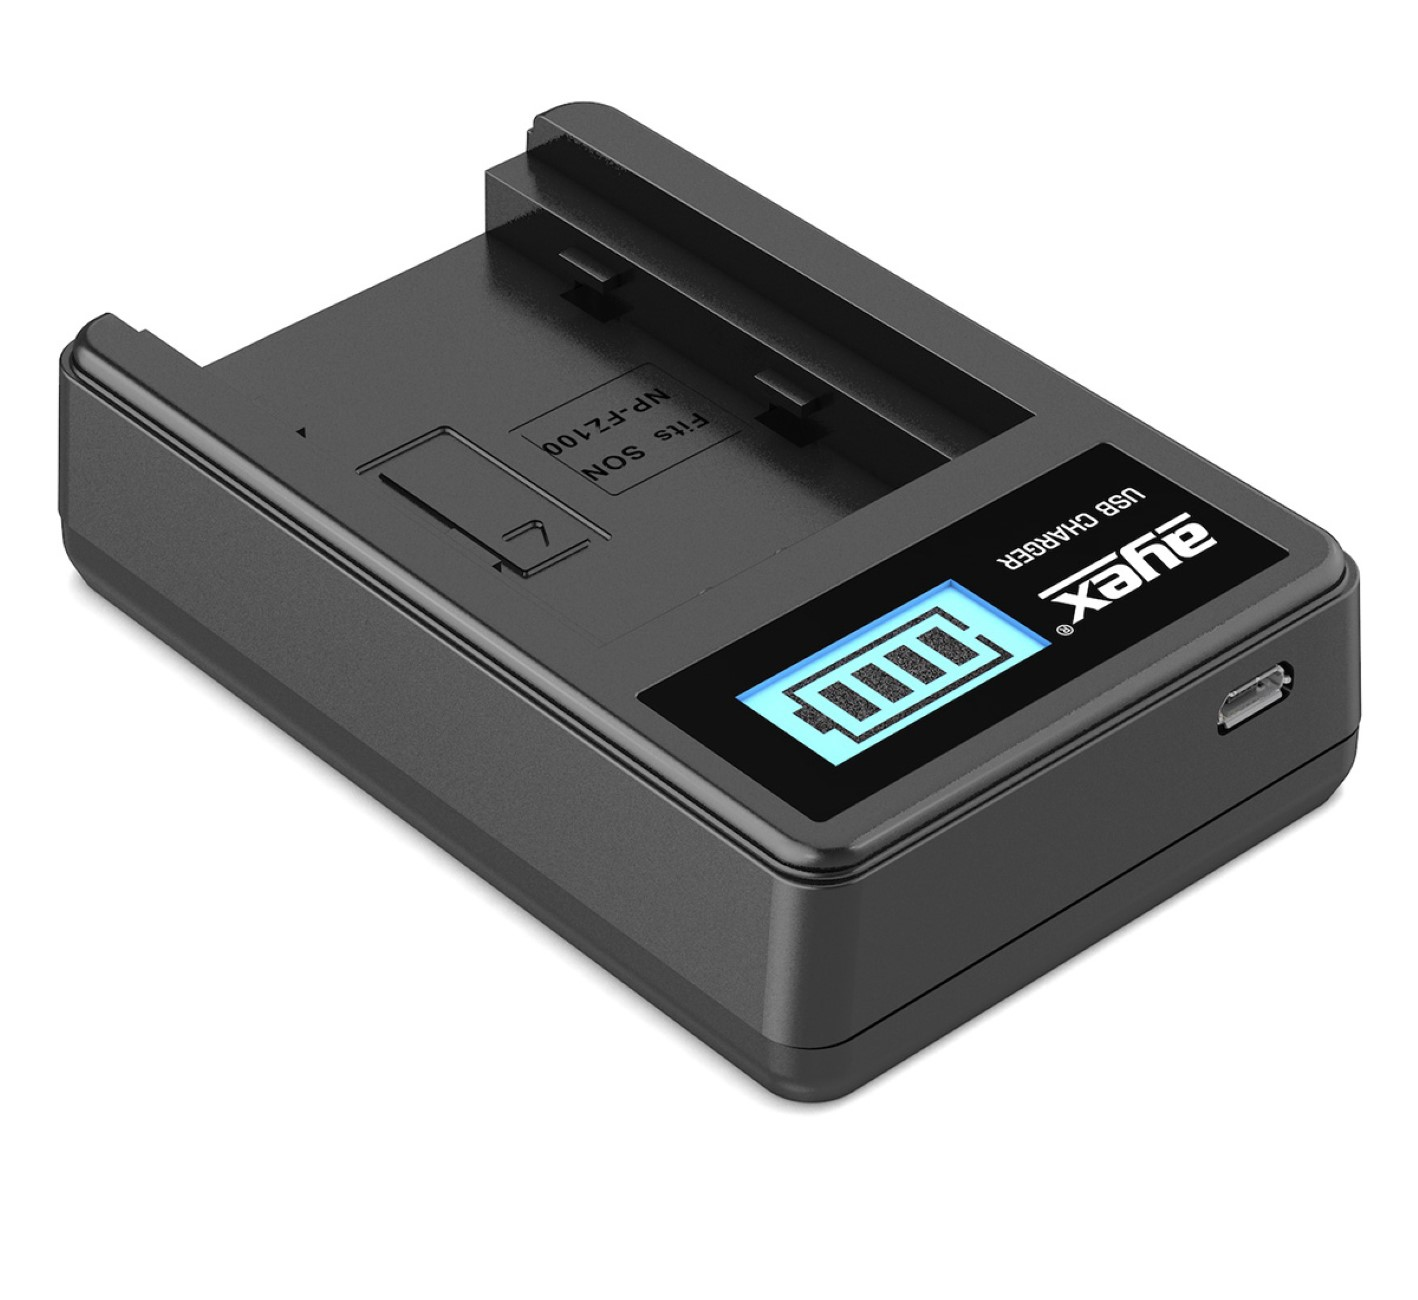 AYEX USB Ladegerät Akku, Kamera-Akku Black Lader, NP-FZ100 für Sony